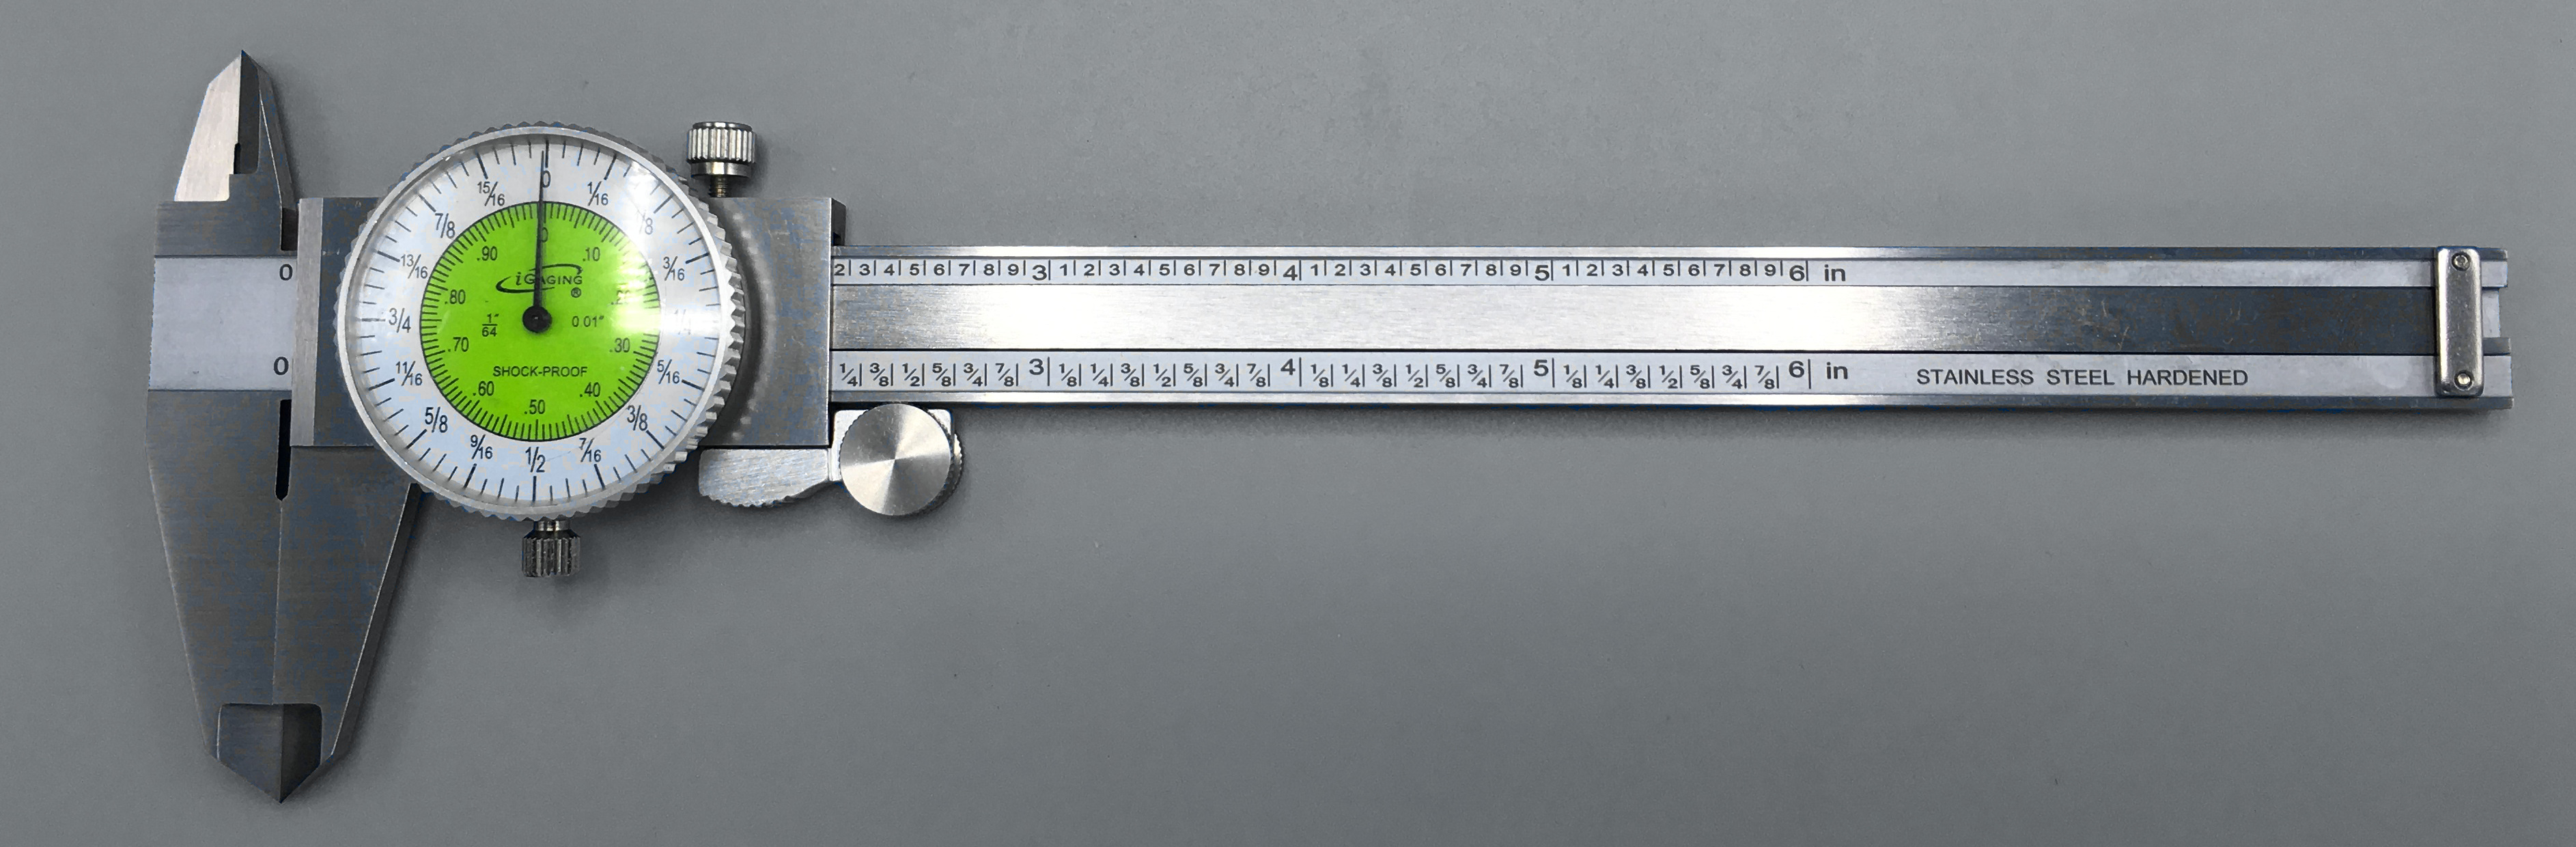 iGaging 6" caliper dial inches 001" micrometer 100-020 optional depth gauge base 